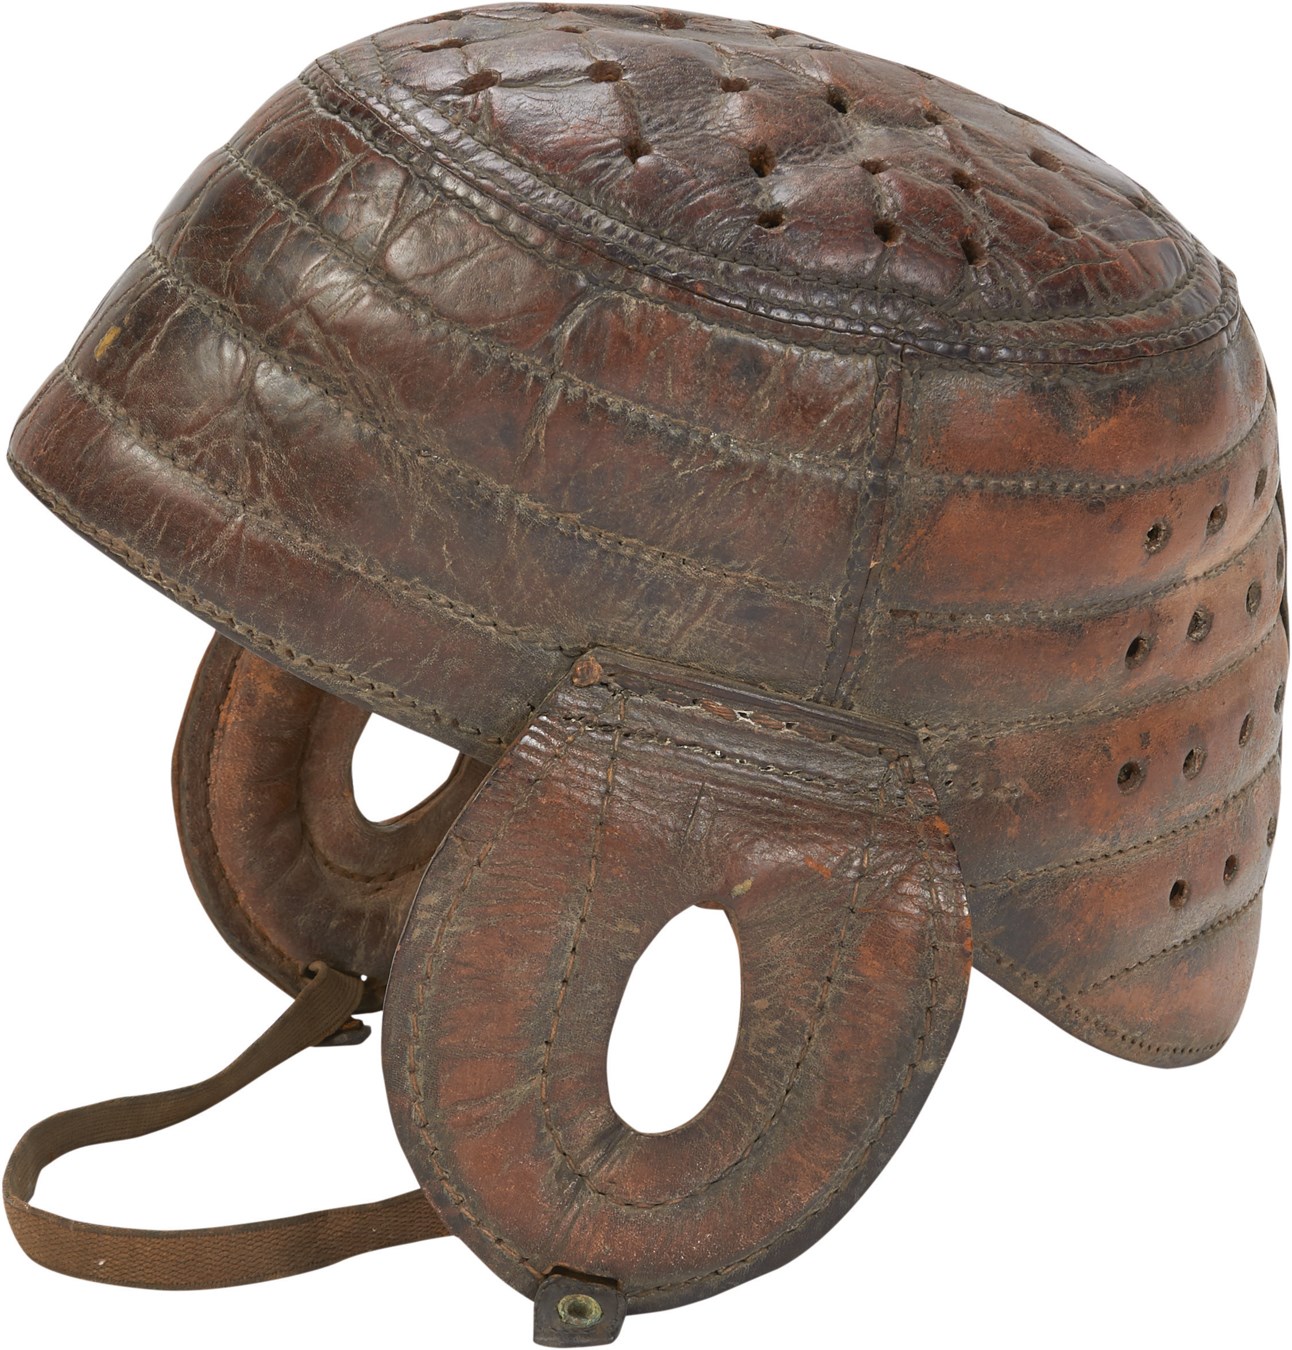 Antique Sporting Goods - Turn of the Century Flat Top Football Helmet